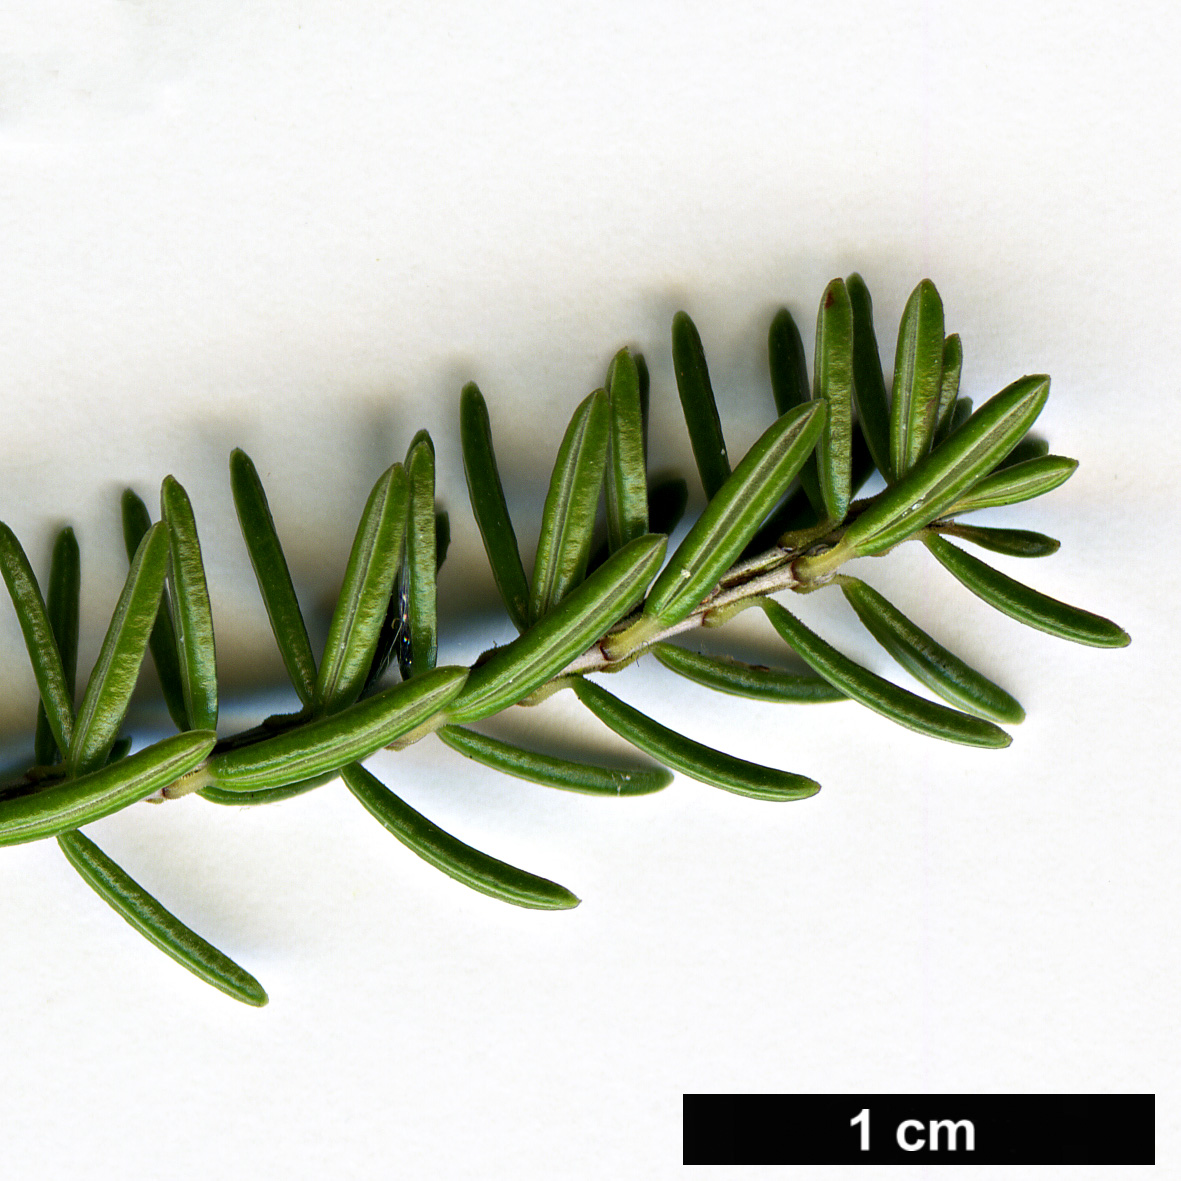 High resolution image: Family: Ericaceae - Genus: Erica - Taxon: multiflora